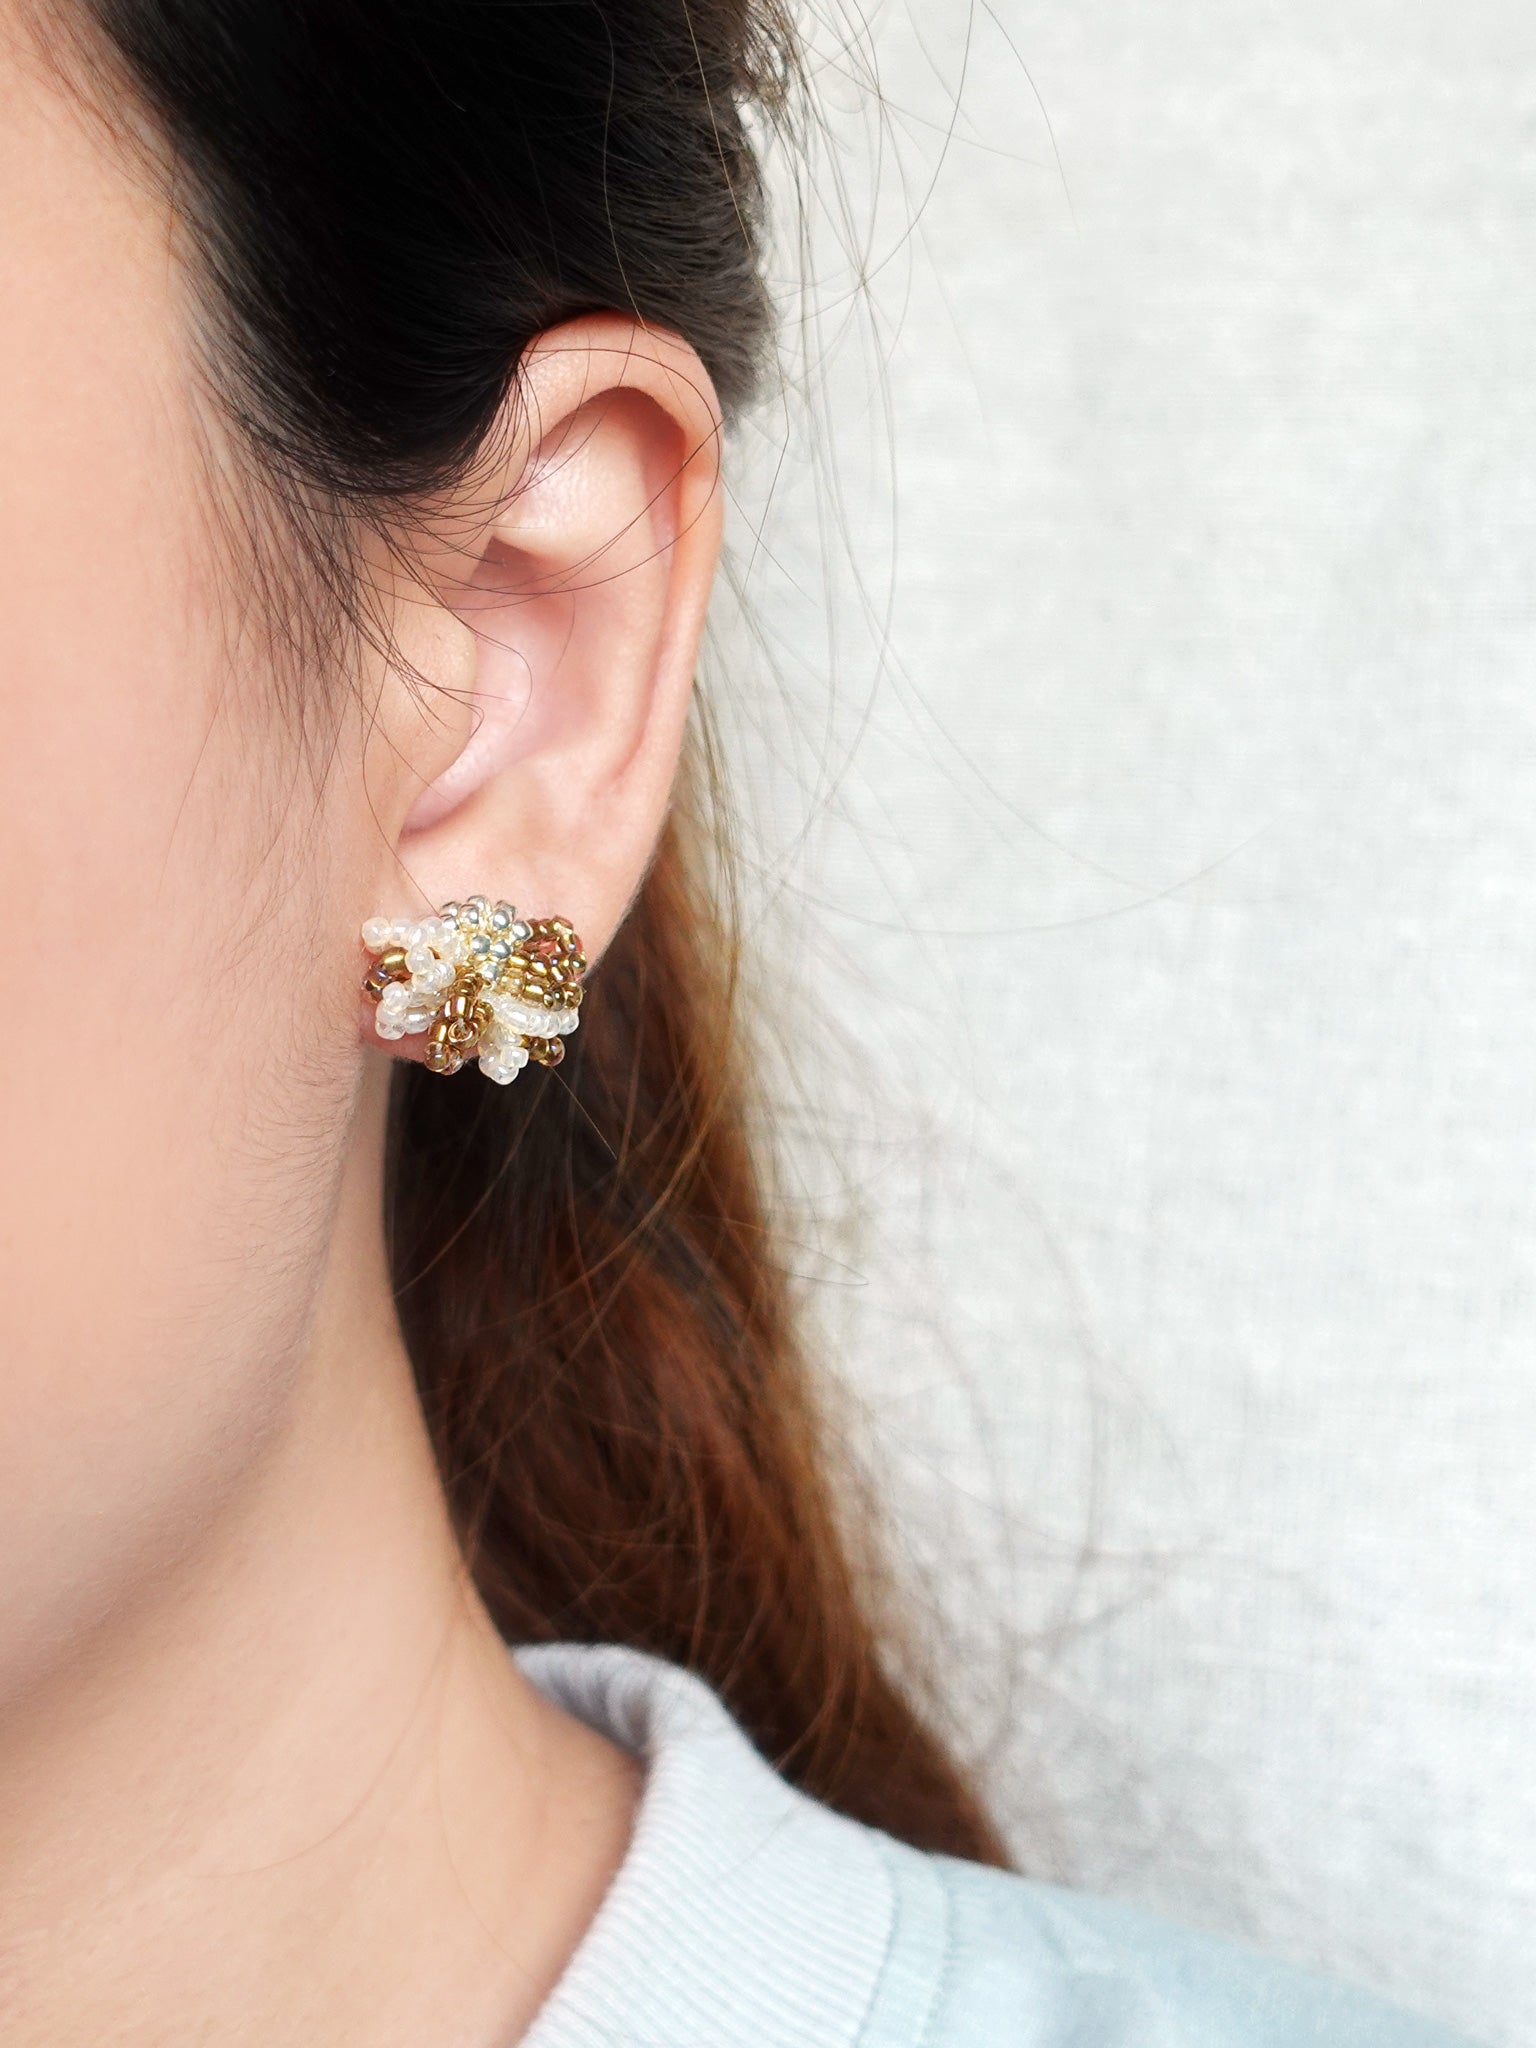 Camellia Bicolor Stud Earrings in Caramel Brown Model